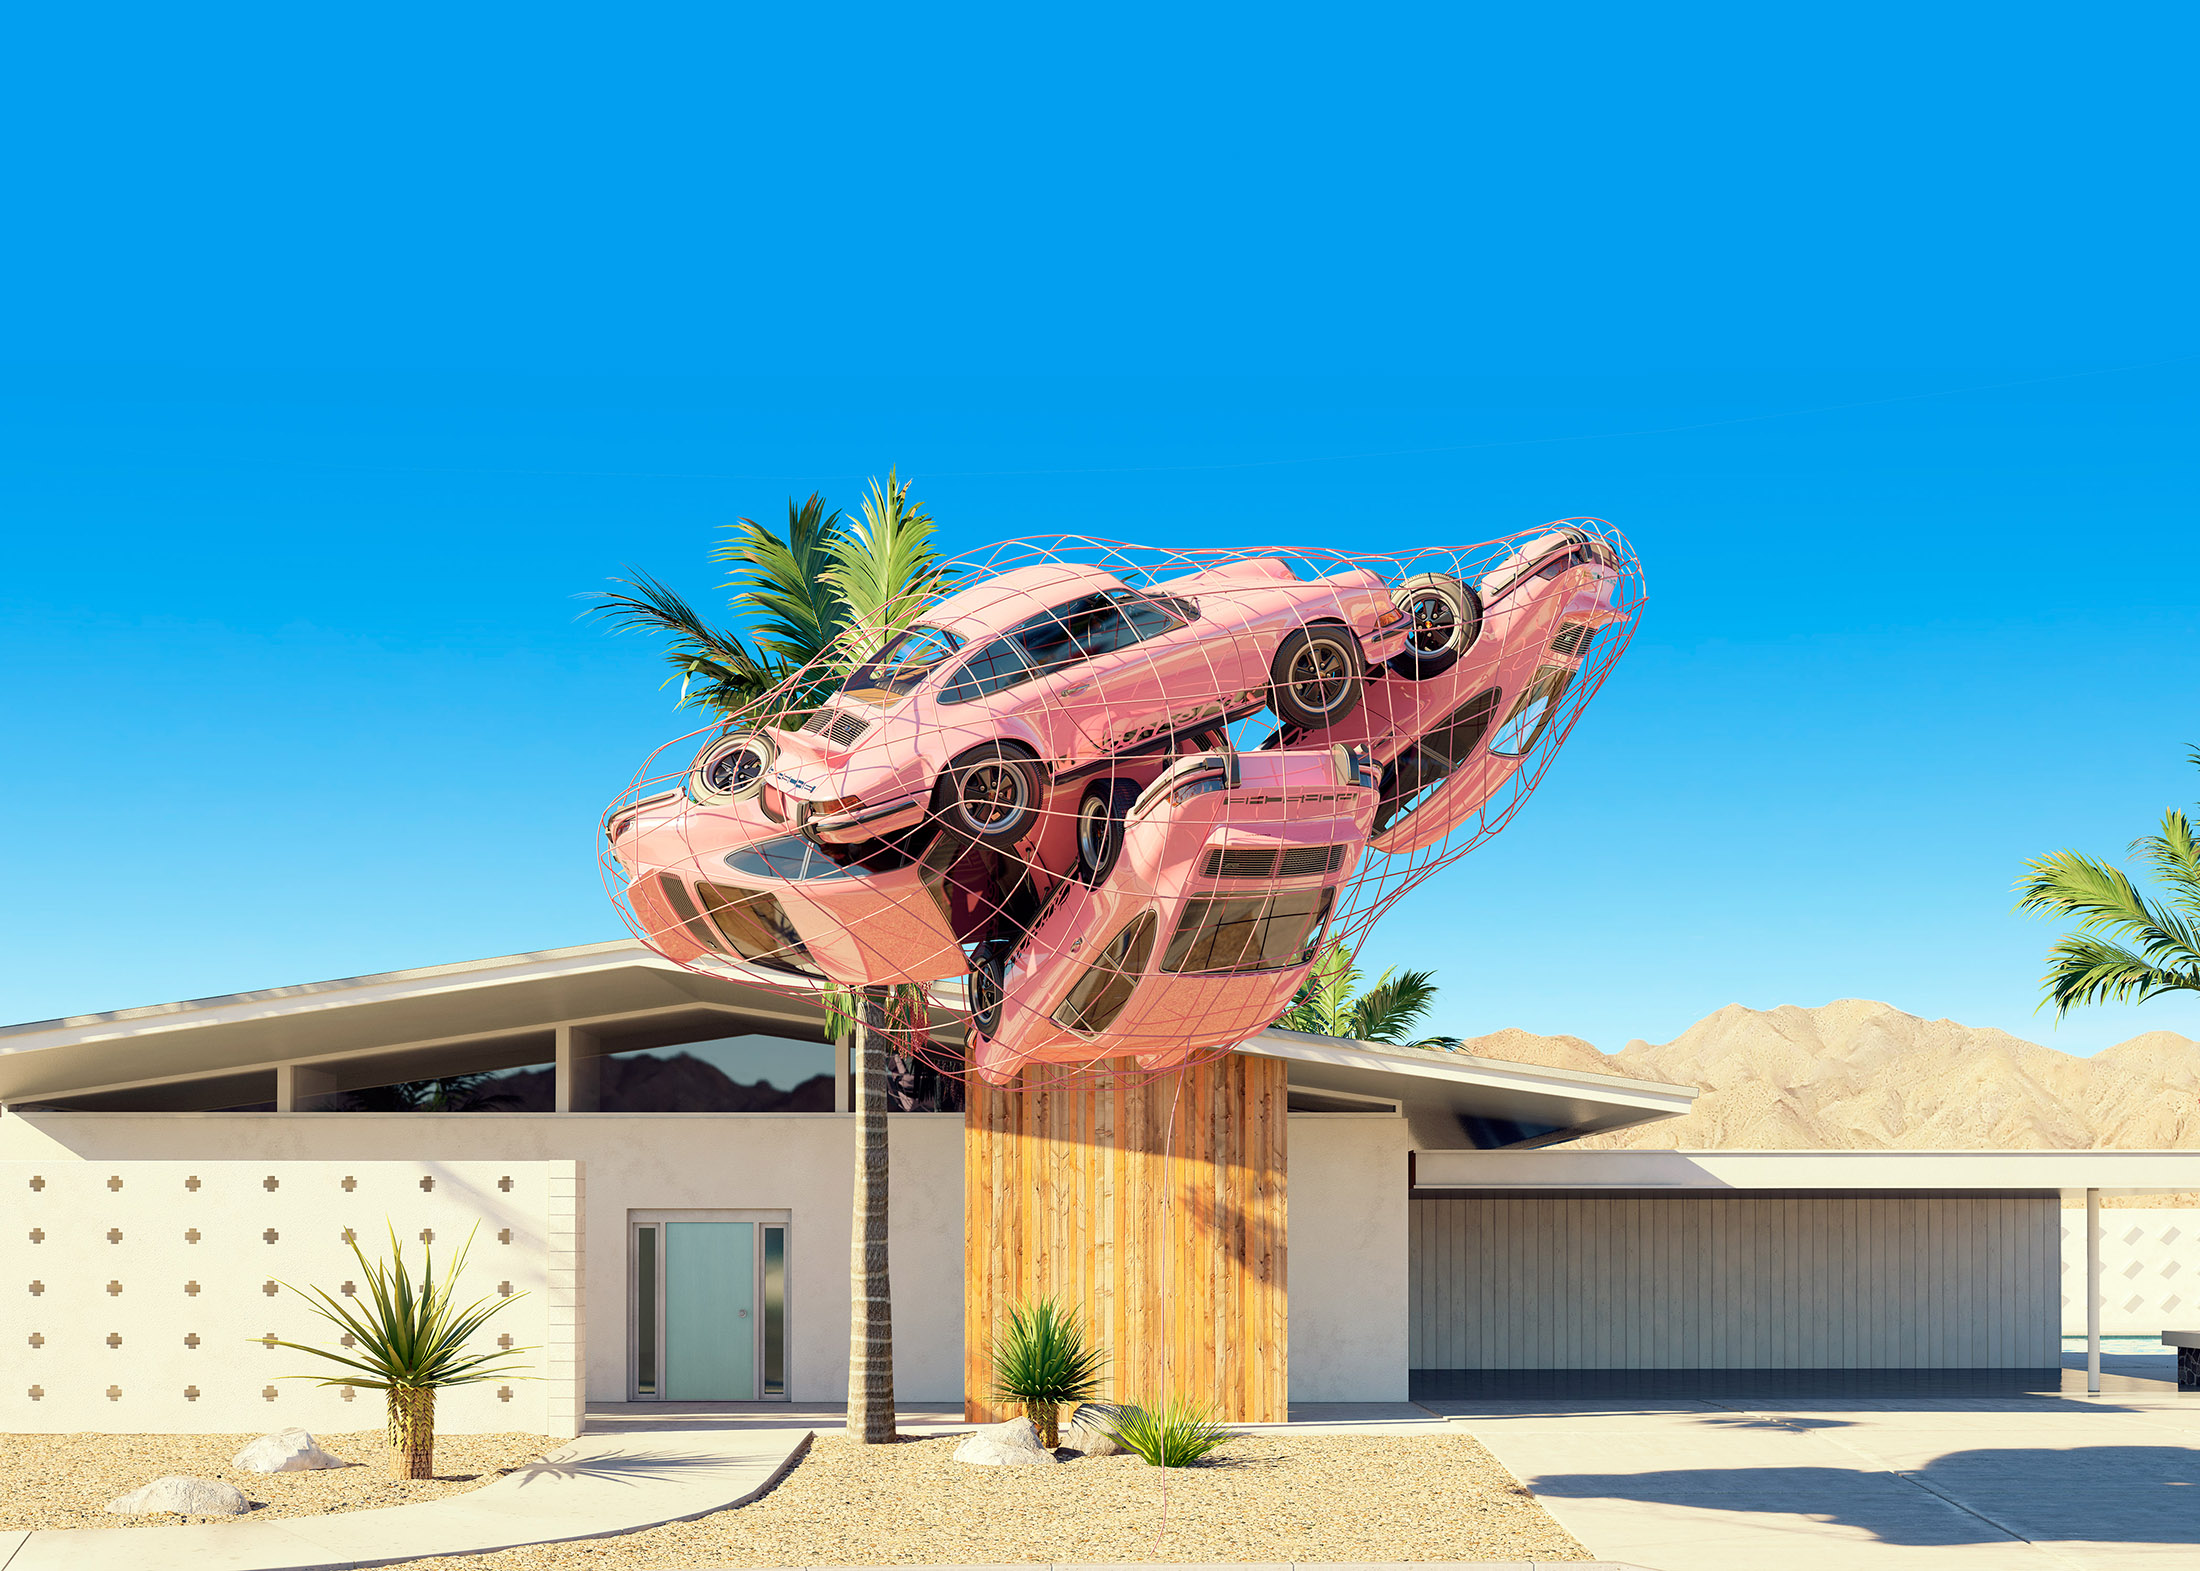 Digital art of Porsche cars in fishing net above house